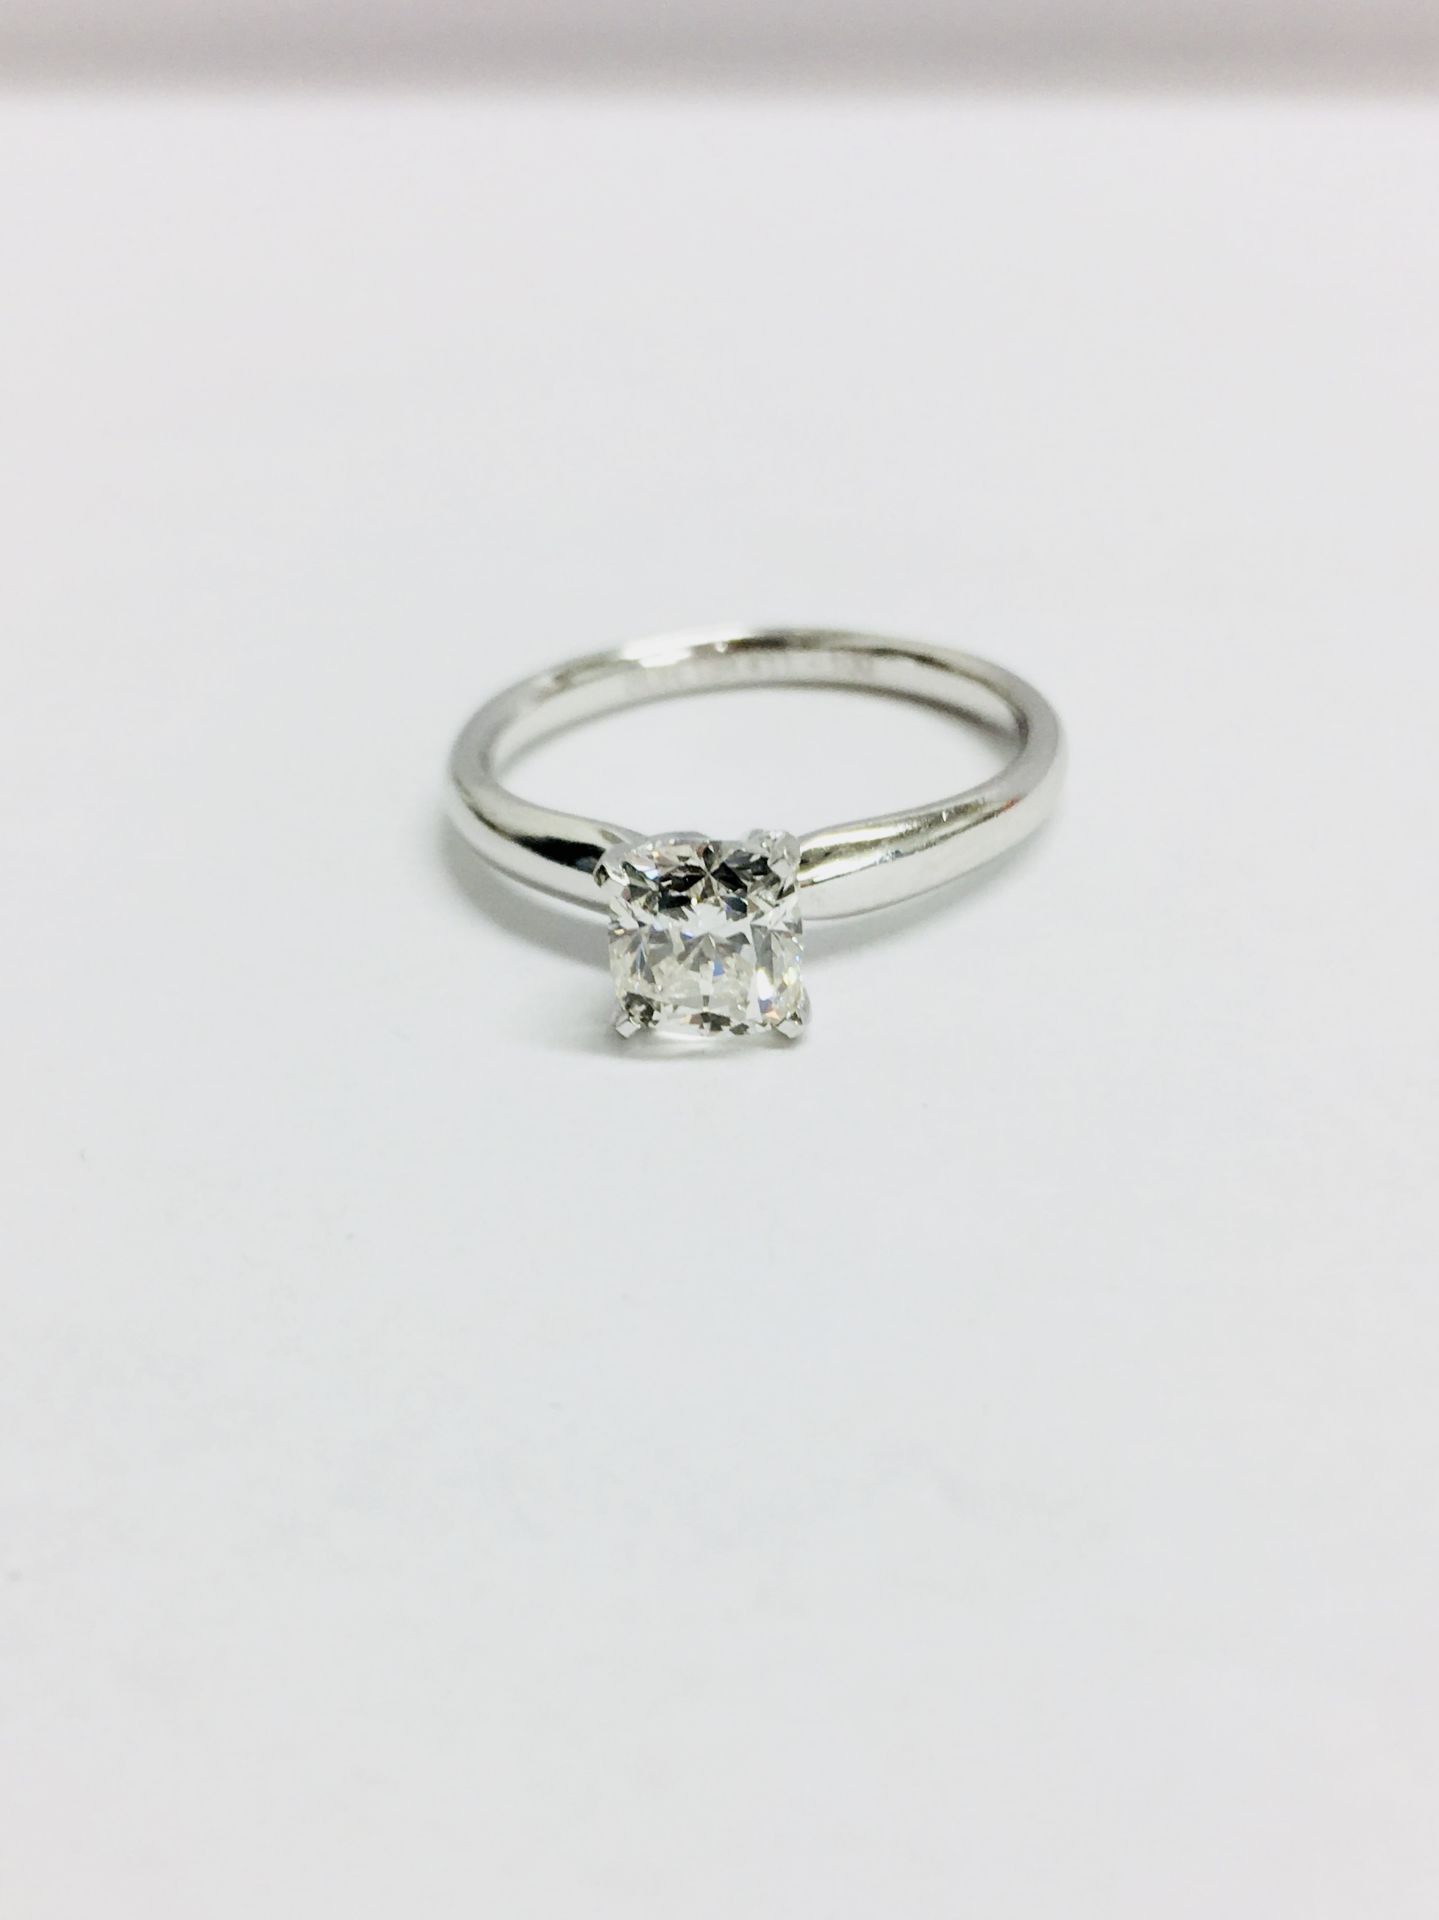 1c t cushion cut diamond solitaires ring,1ct cushion cut H colour vs 1 clarity,platinum setting - Image 6 of 6